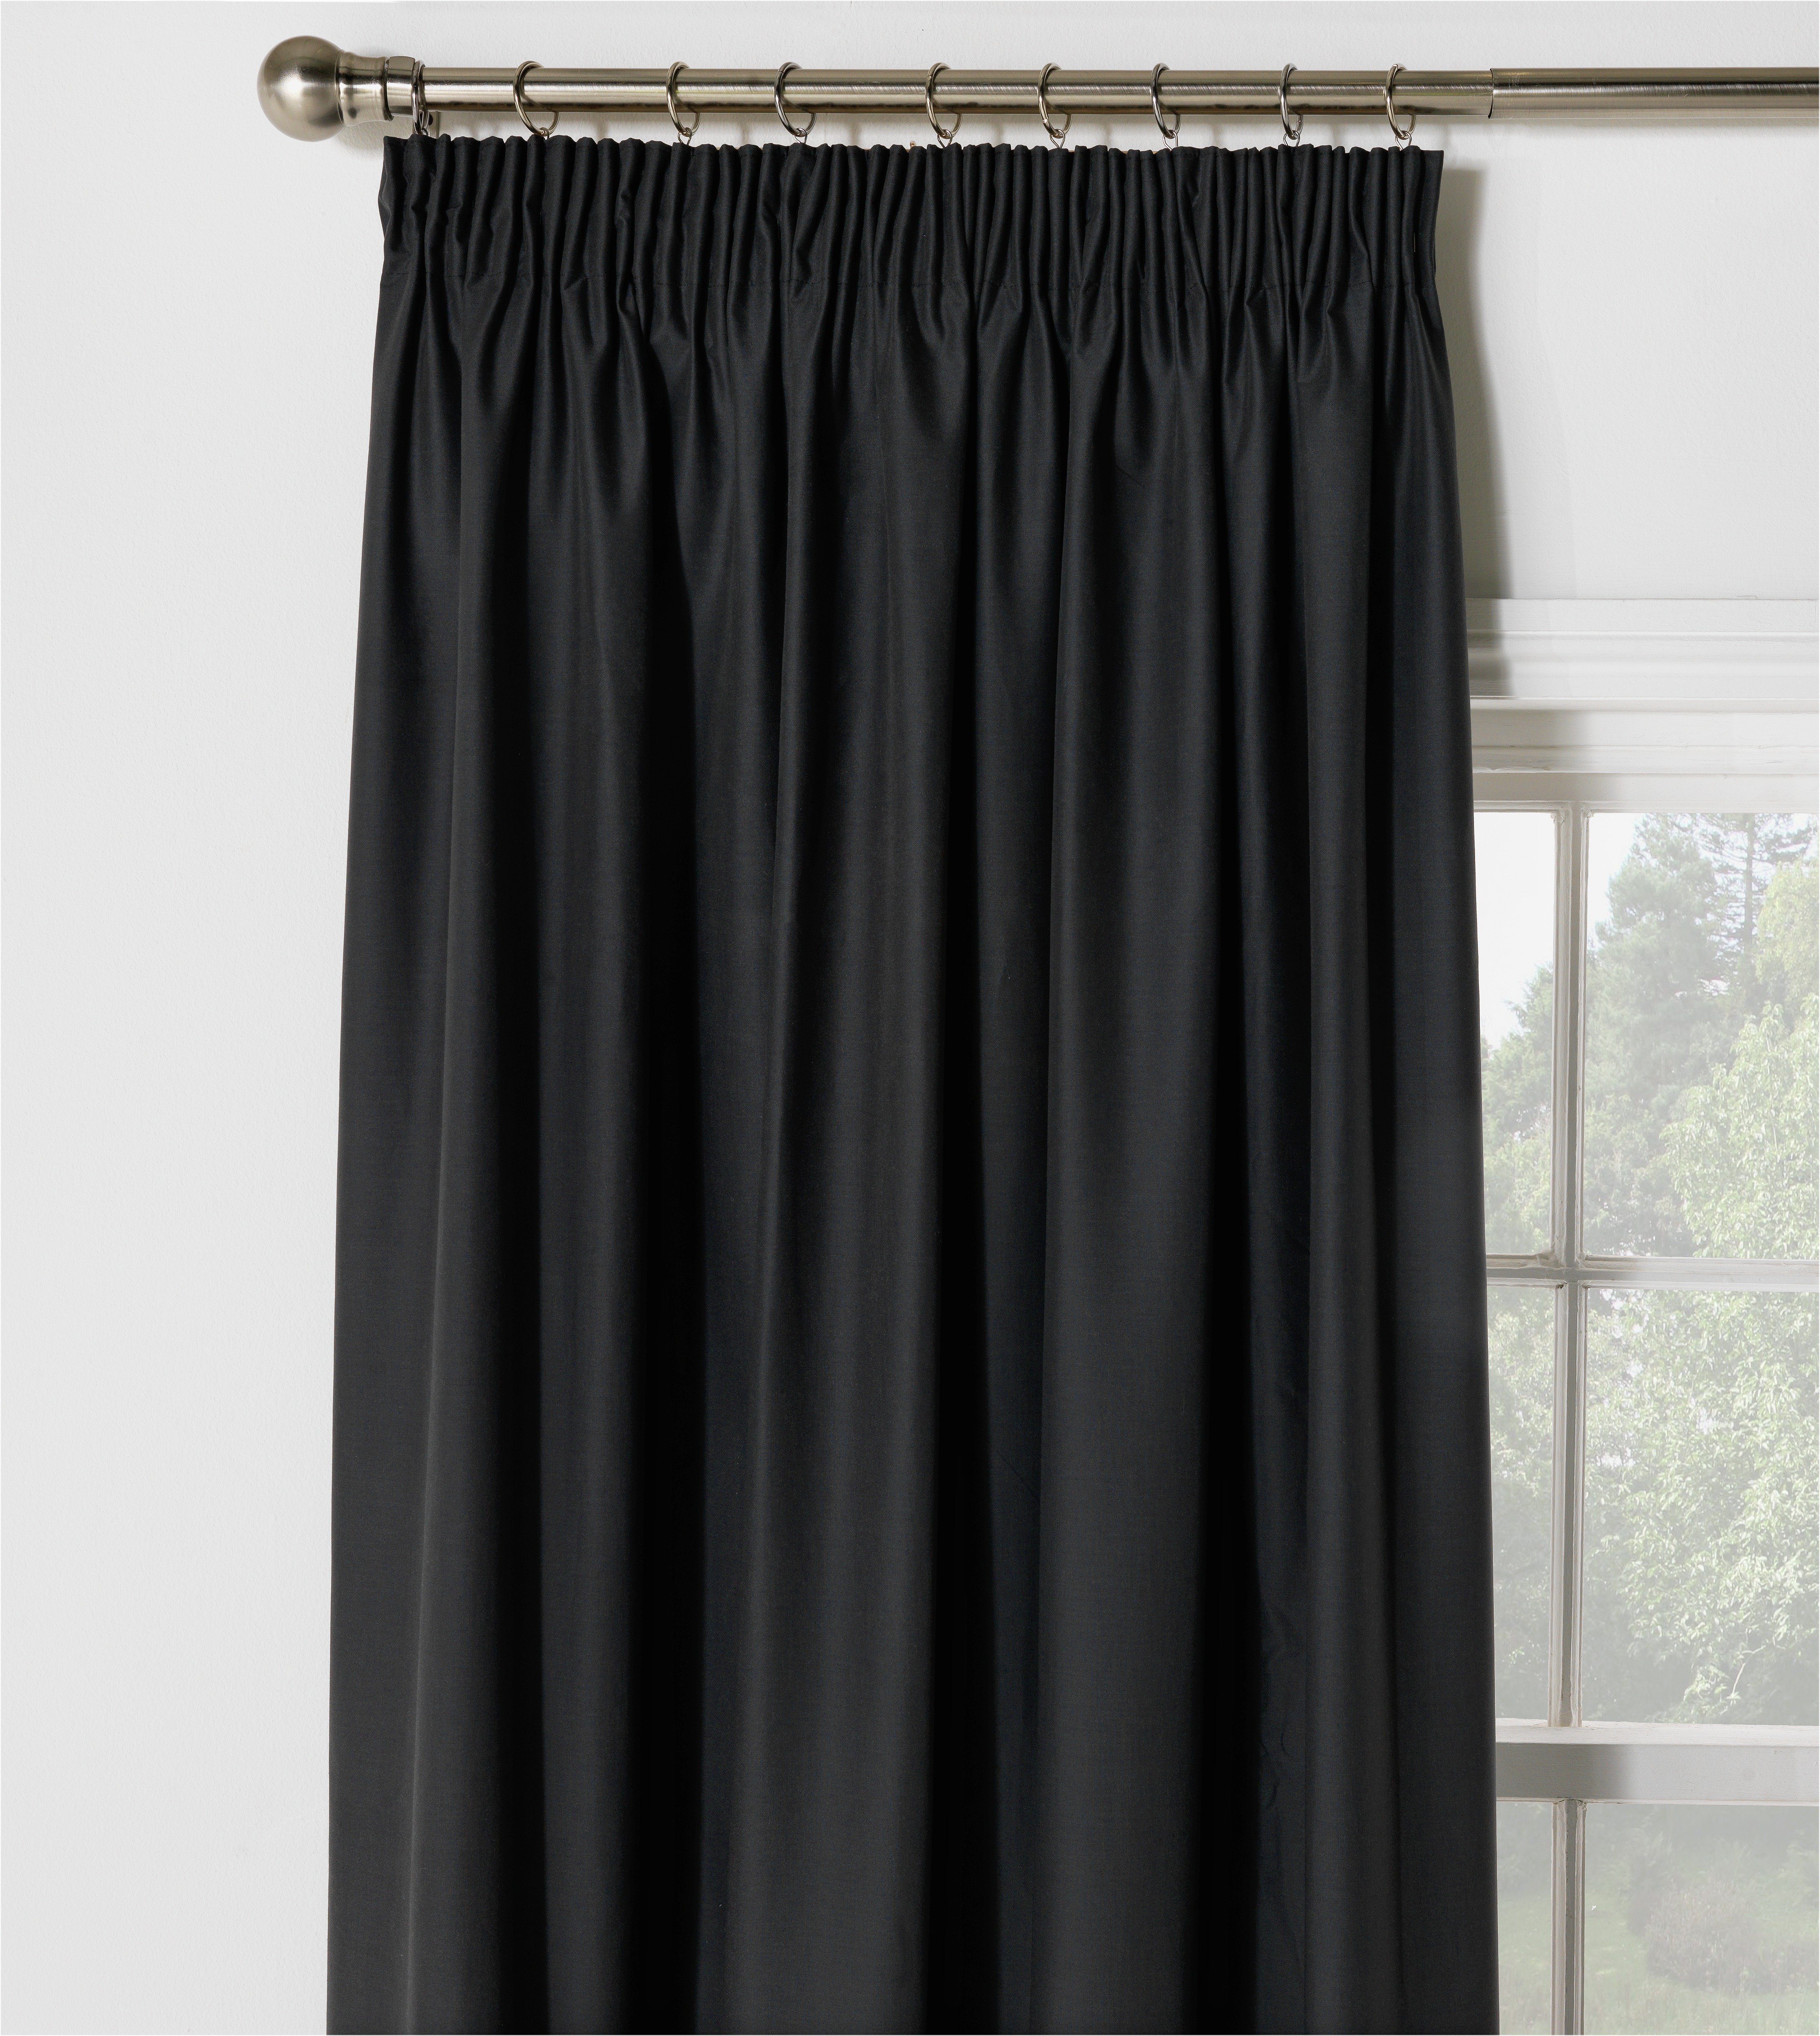 Buy ColourMatch Kid's Star Blackout Curtains - 168 x 137cm at Argos.co ...